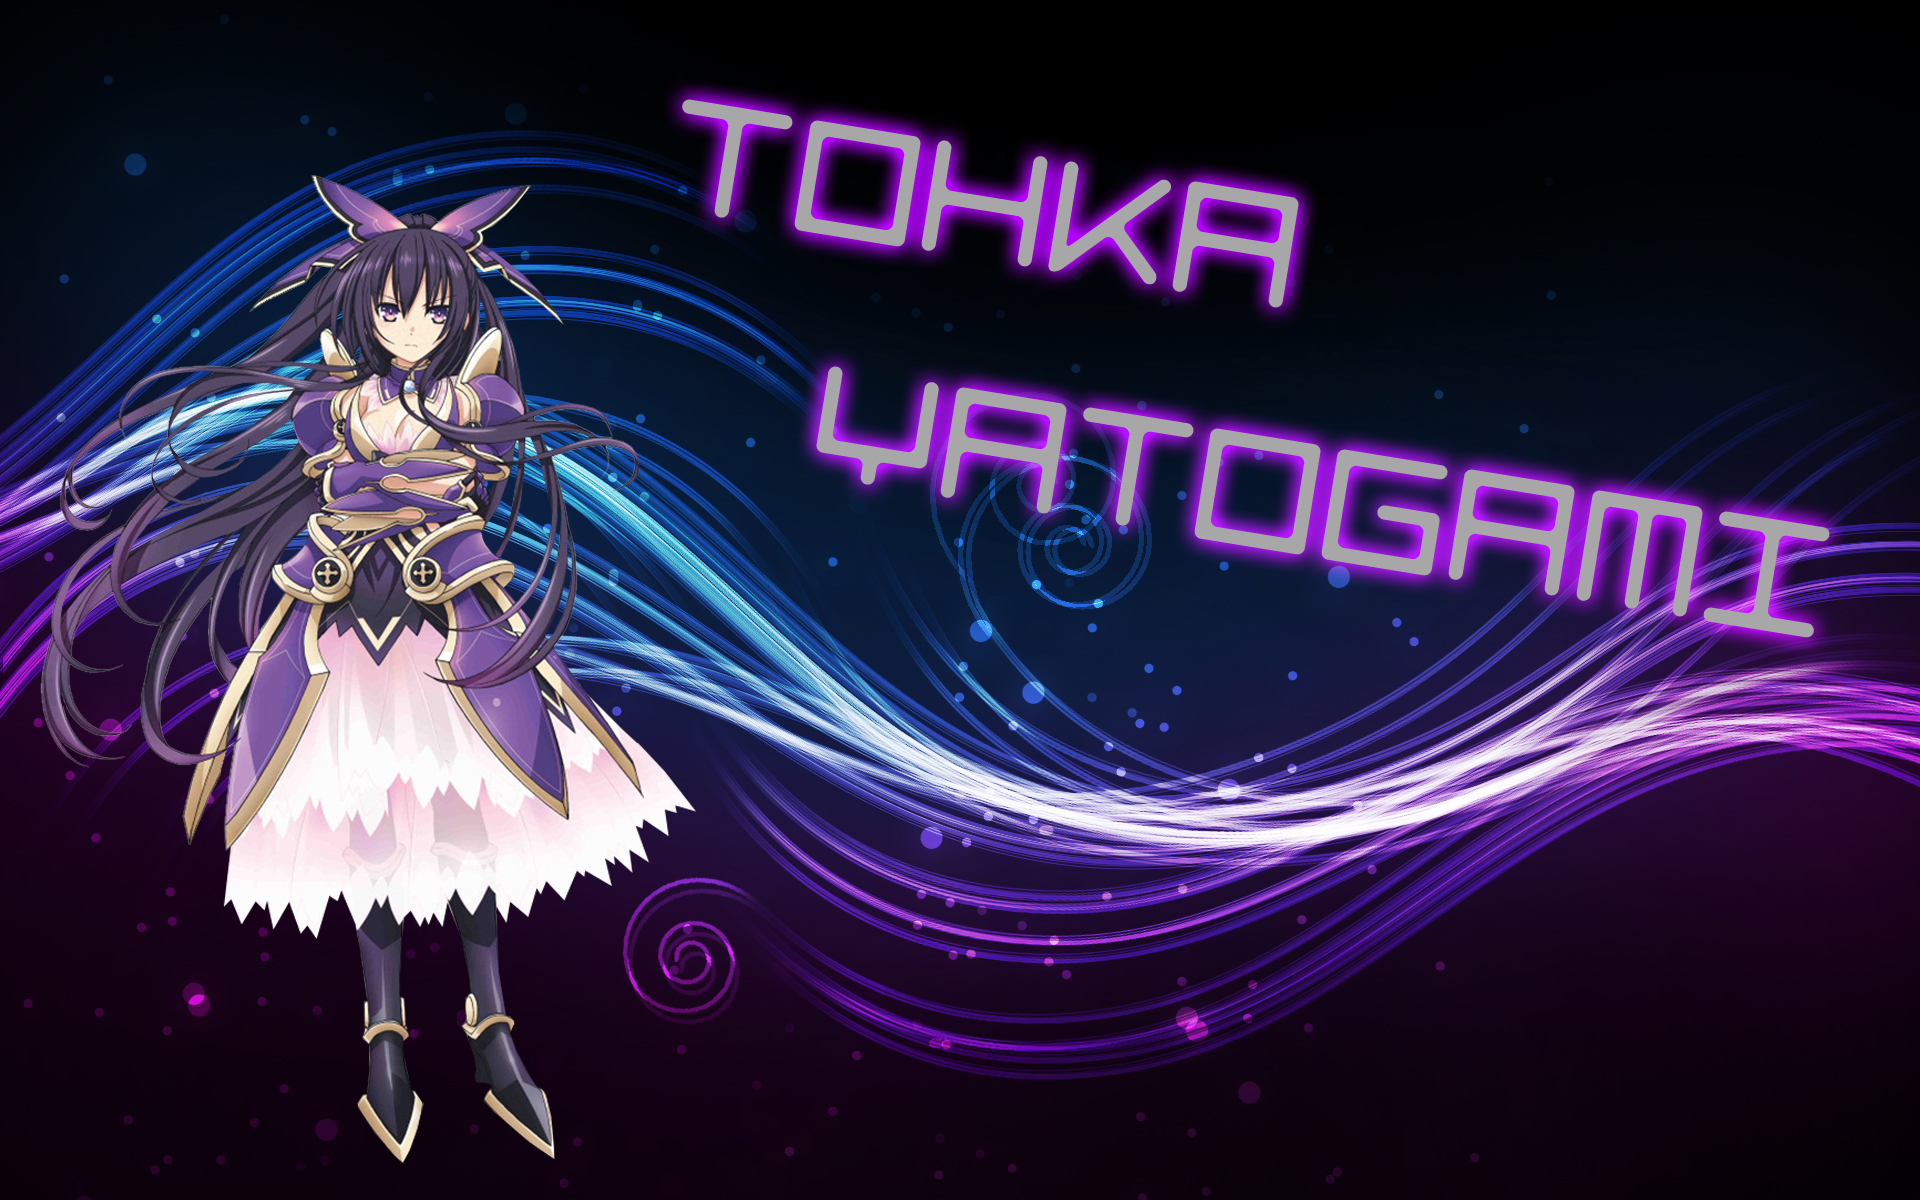 tohka yatogami壁紙,紫の,バイオレット,グラフィックデザイン,架空の人物,グラフィックス